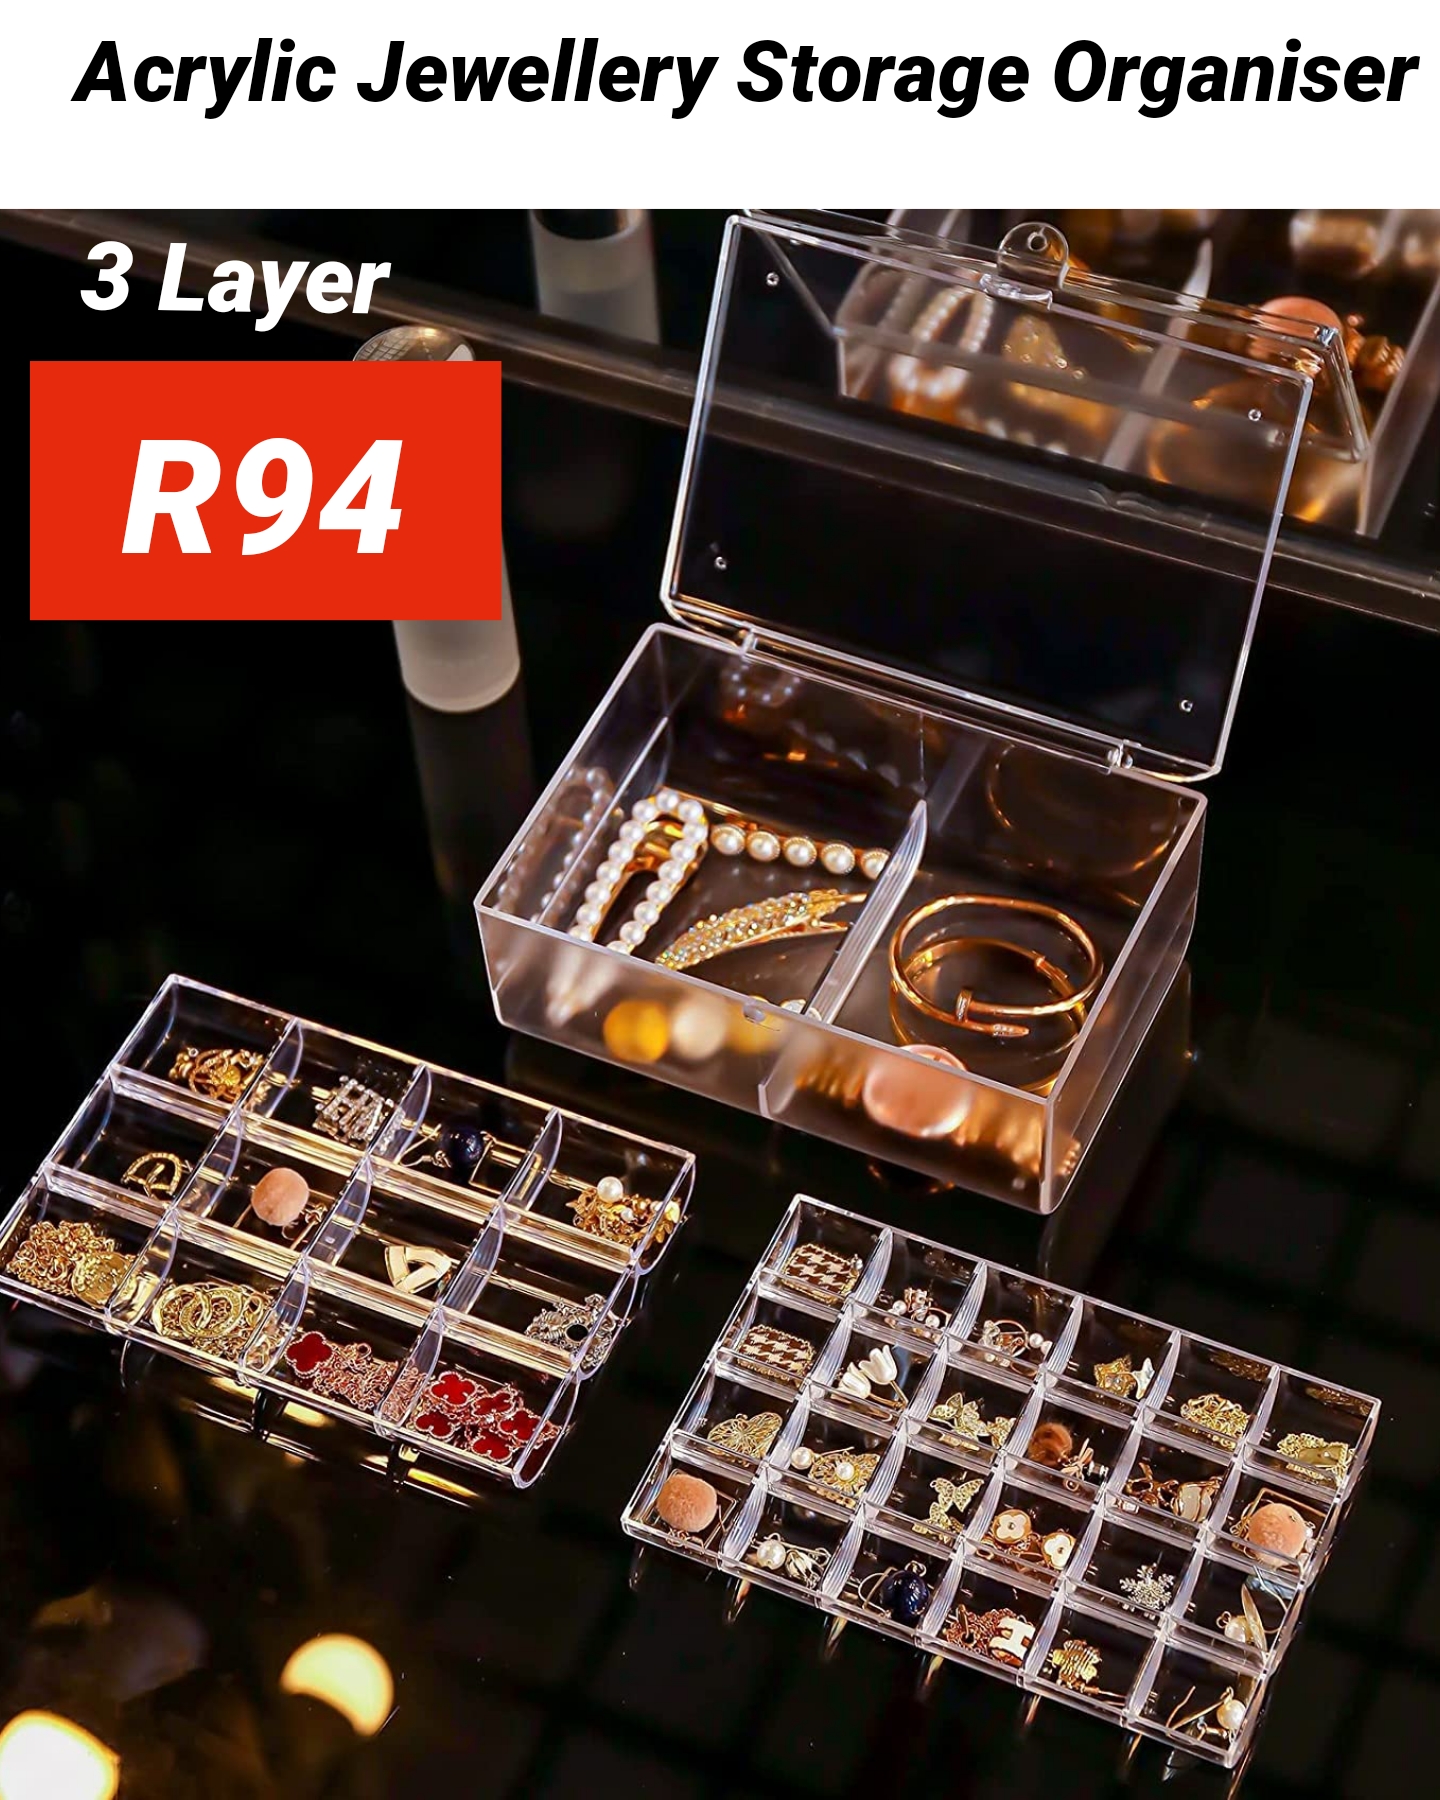 3 layer Acrylic Storage Jewellery Organiser